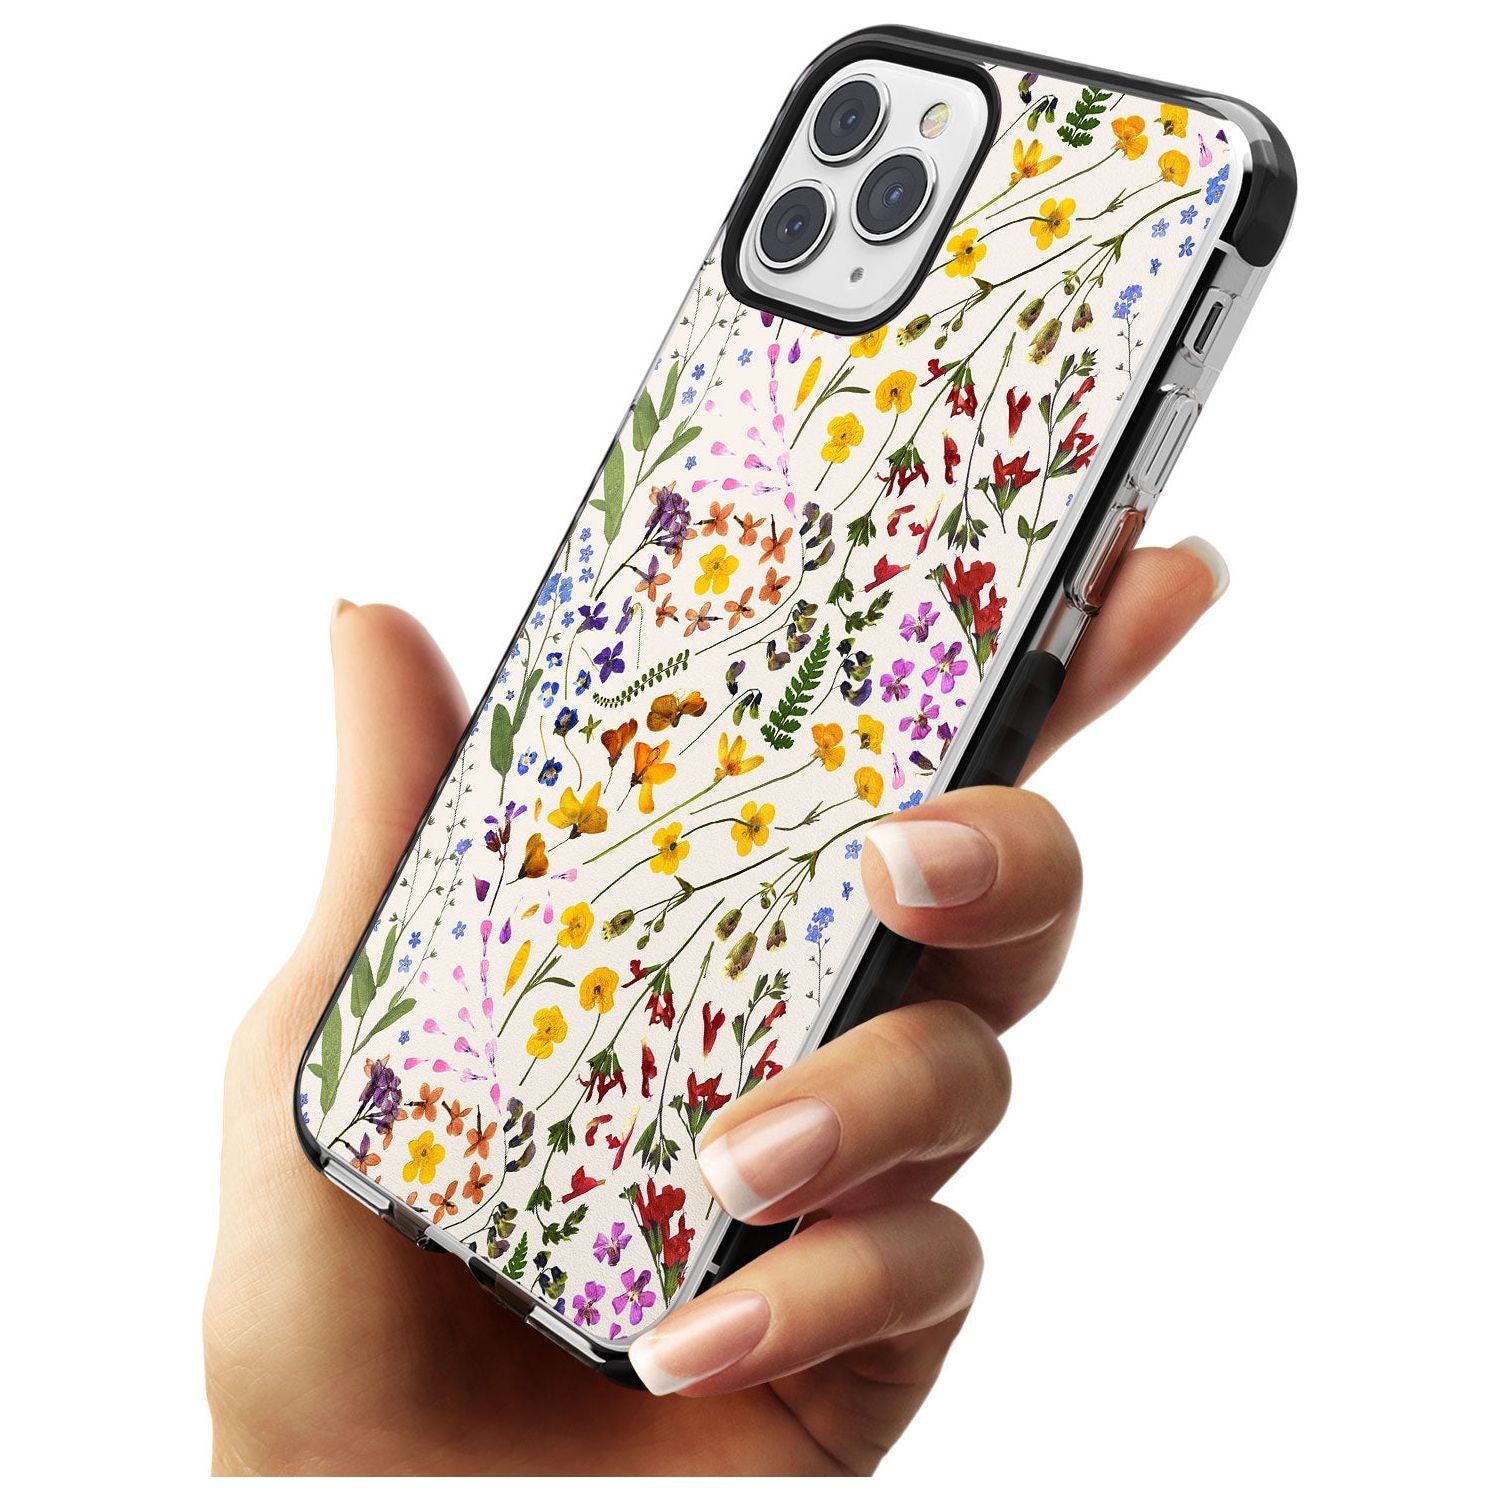 Wildflower & Leaves Cluster Design - Cream Black Impact Phone Case for iPhone 11 Pro Max